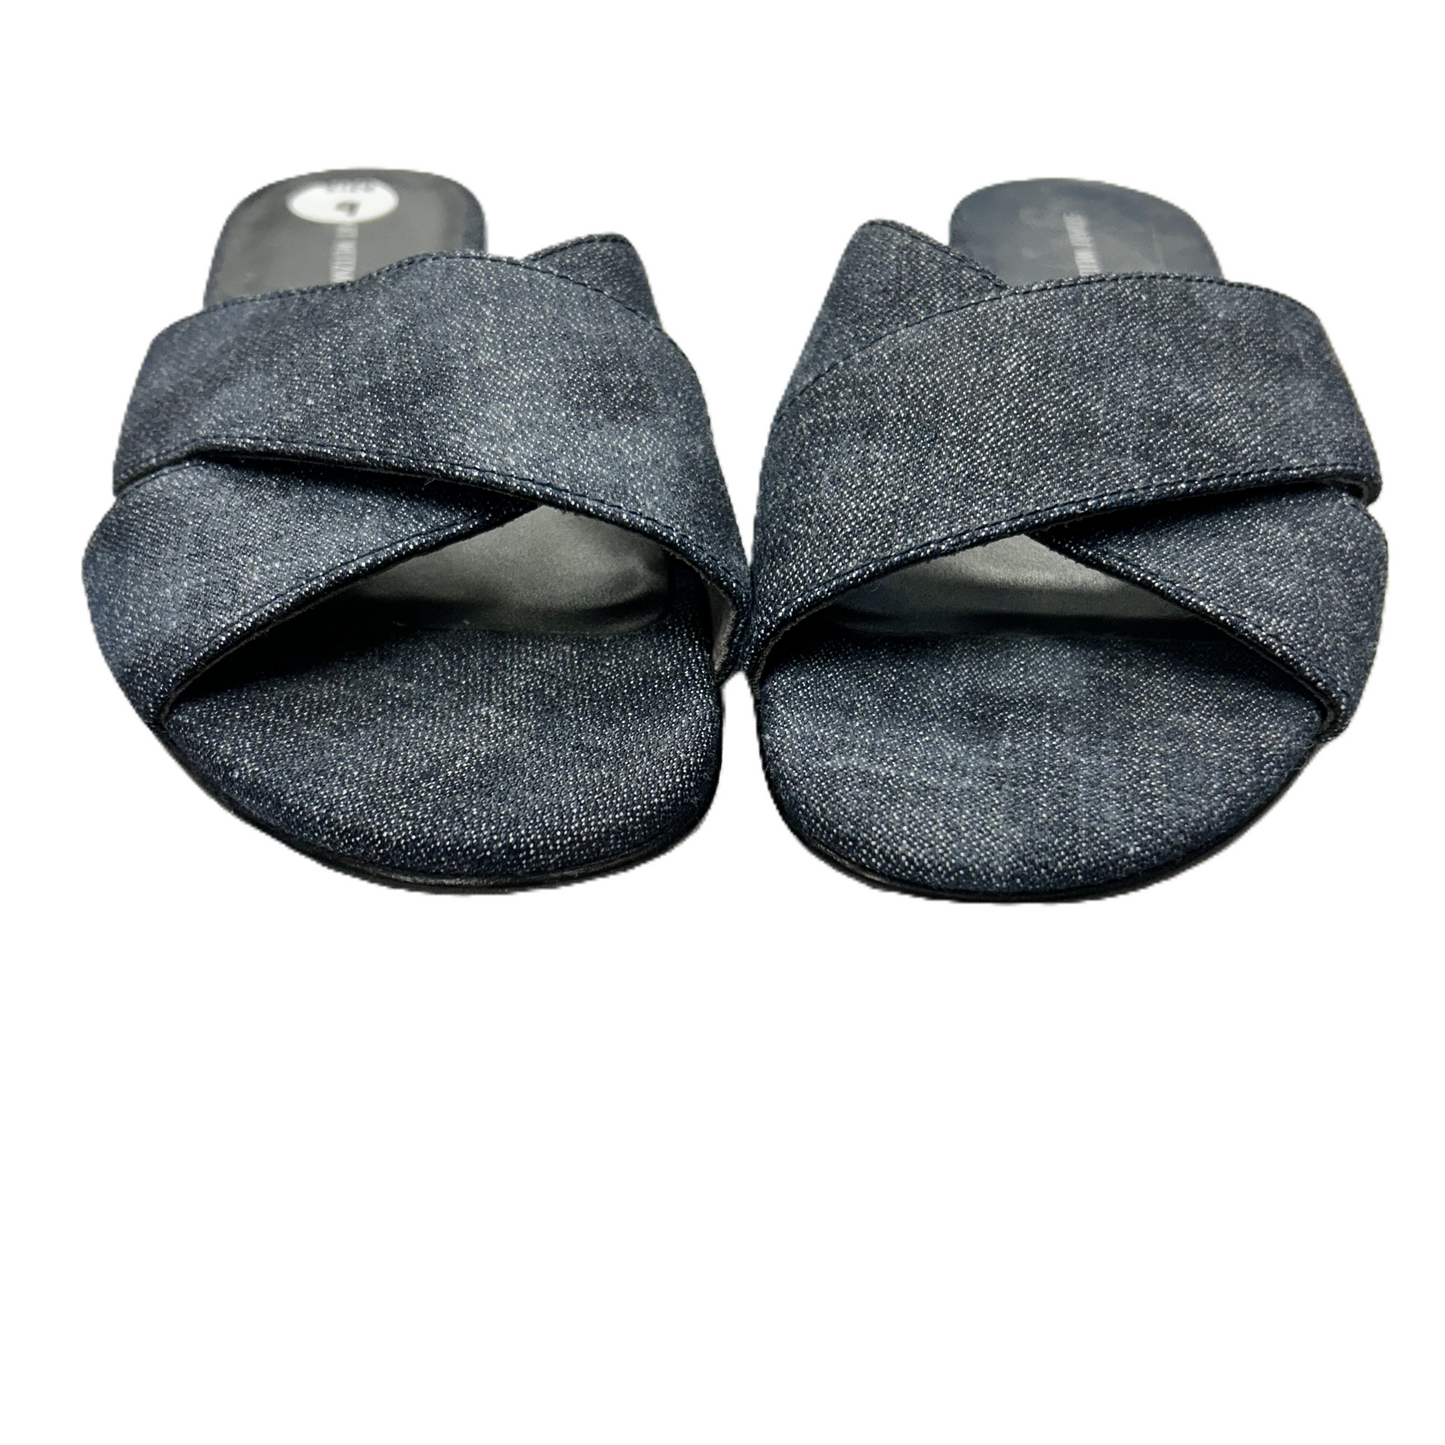 Sandals Flats By Stuart Weitzman  Size: 9